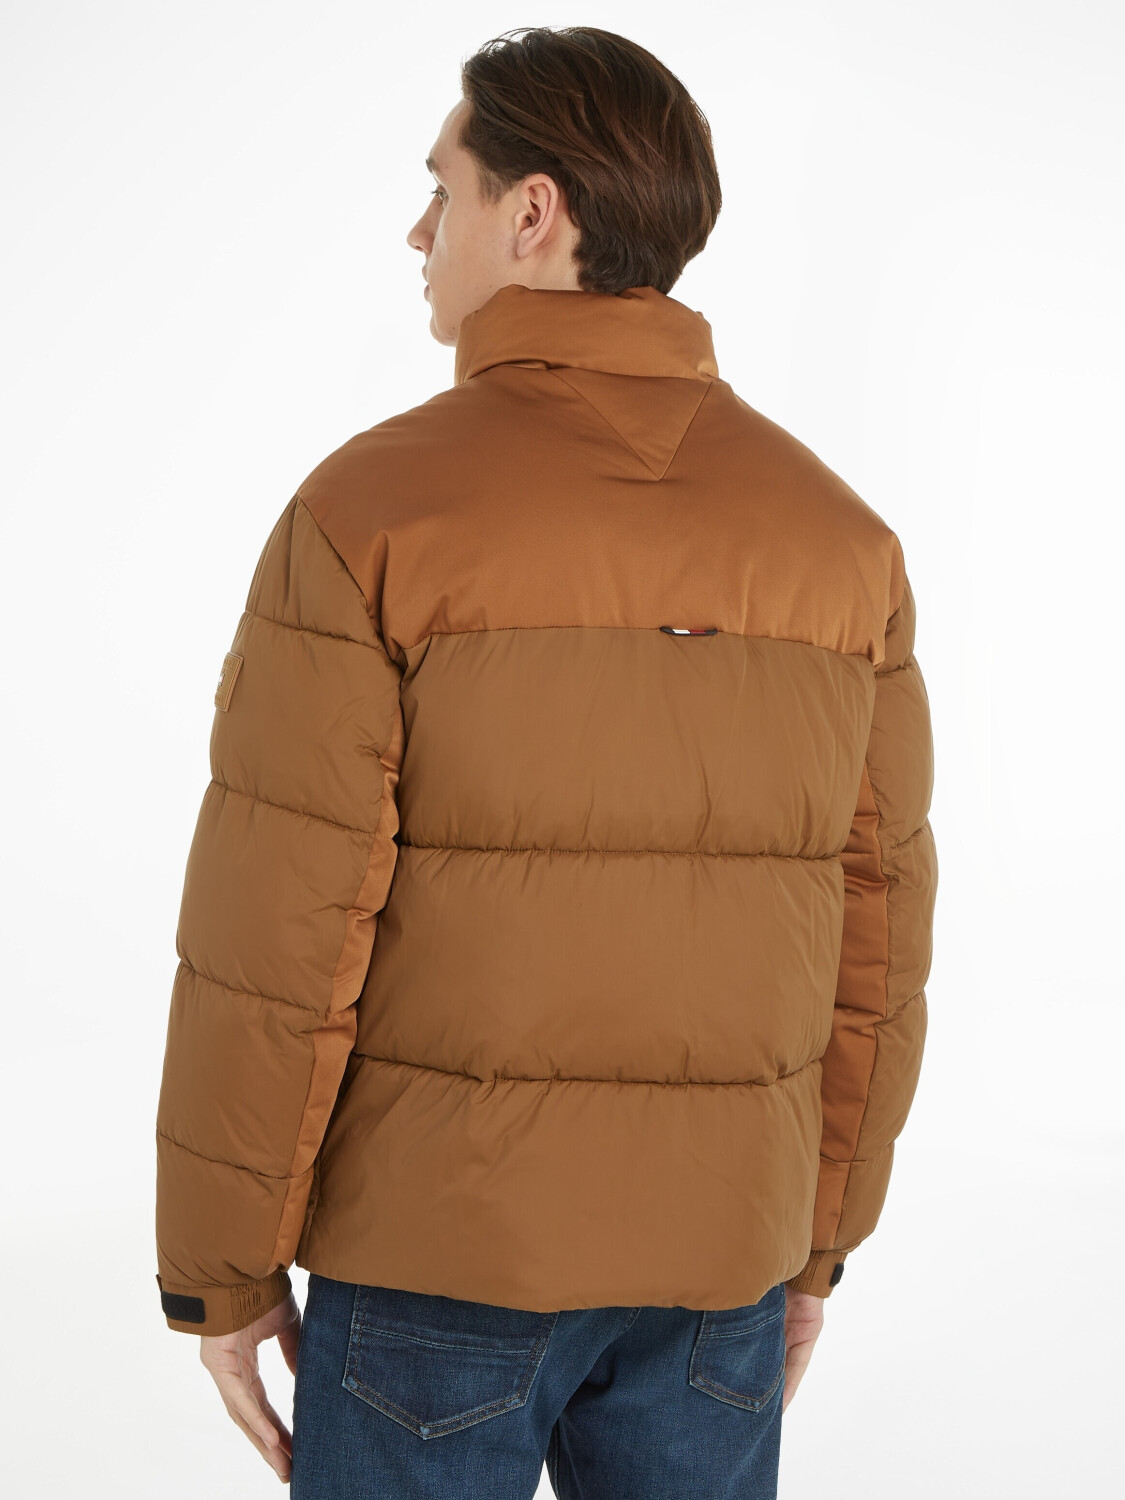 Tommy Hilfiger TH New Puffer 180,00 bei € (MW0MW32770) Warm York khaki ab Recycled Jacket Preisvergleich desert 